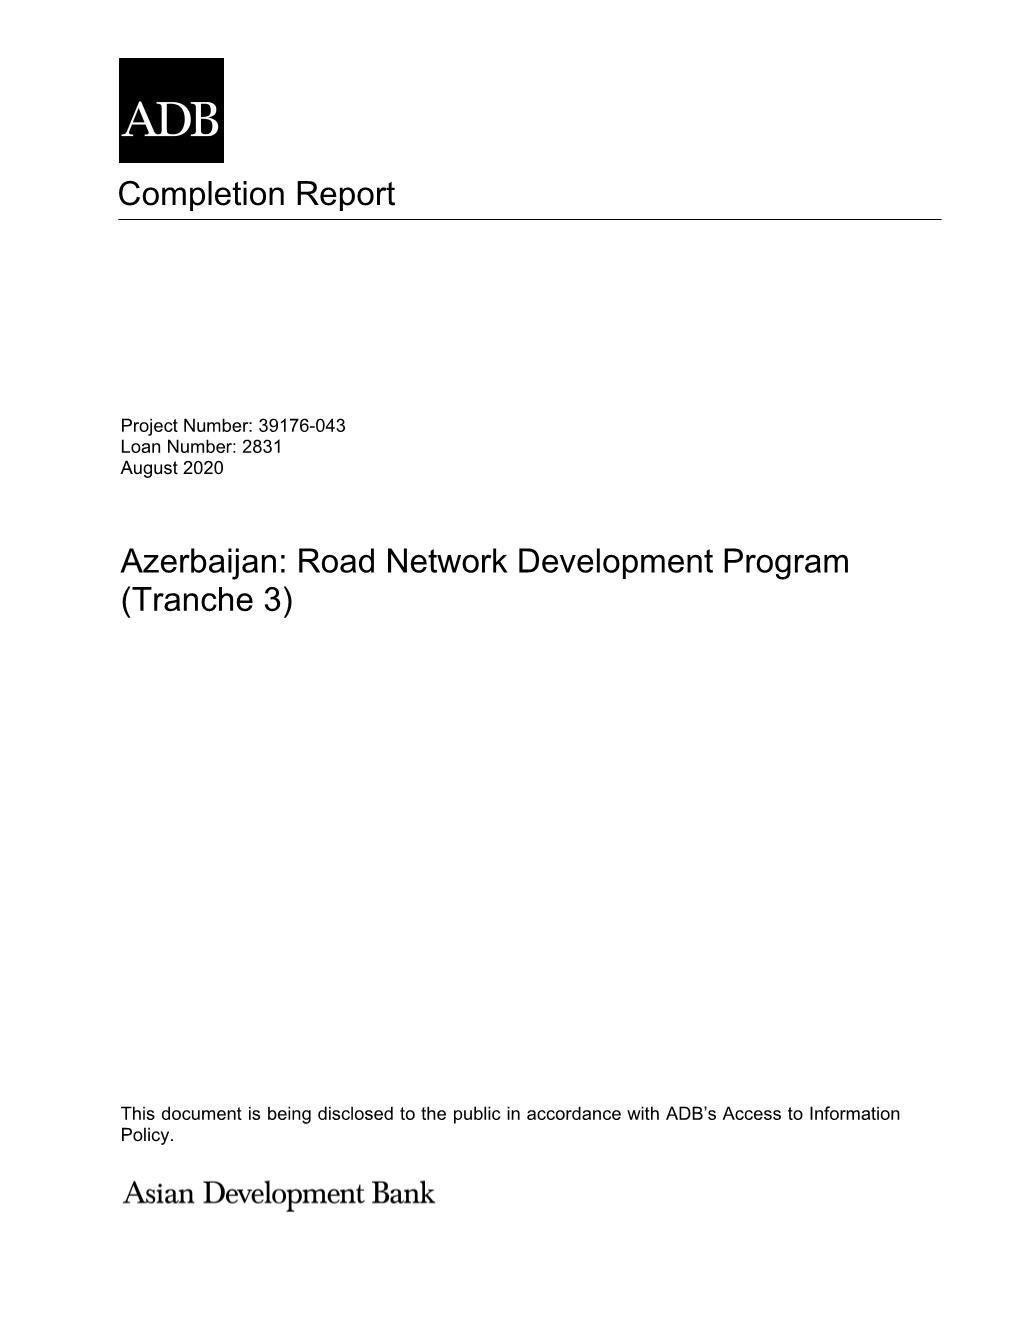 Completion Report Azerbaijan: Road Network Development Program